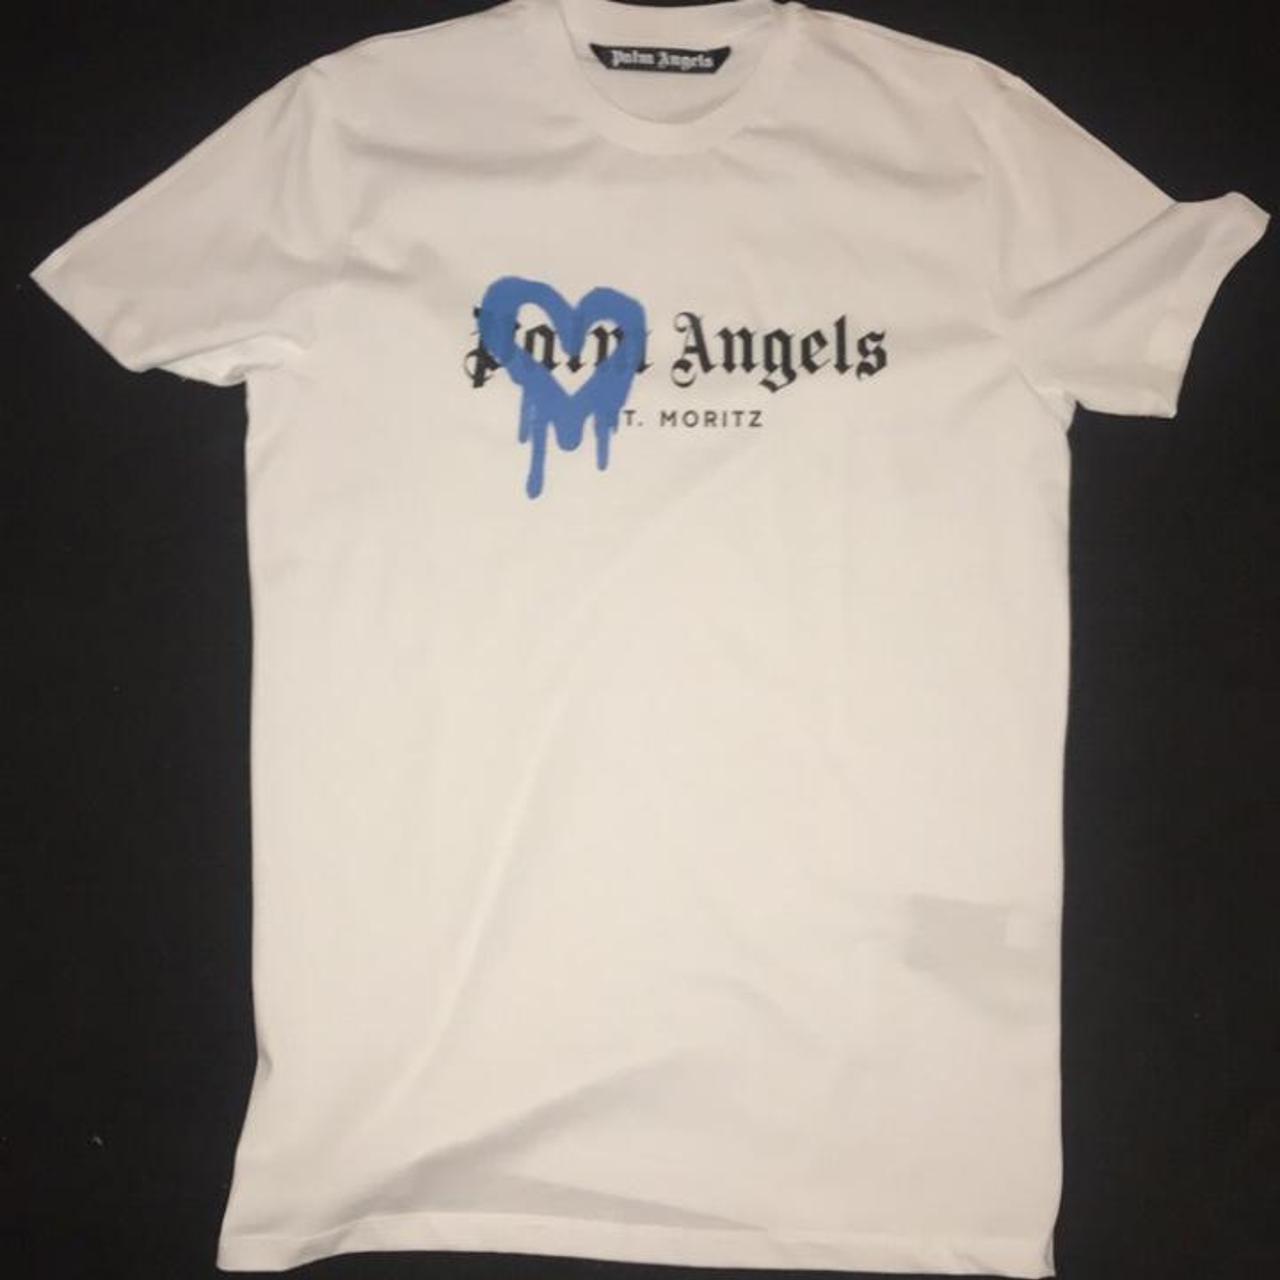 Palm Angels Men's White and Blue T-shirt | Depop